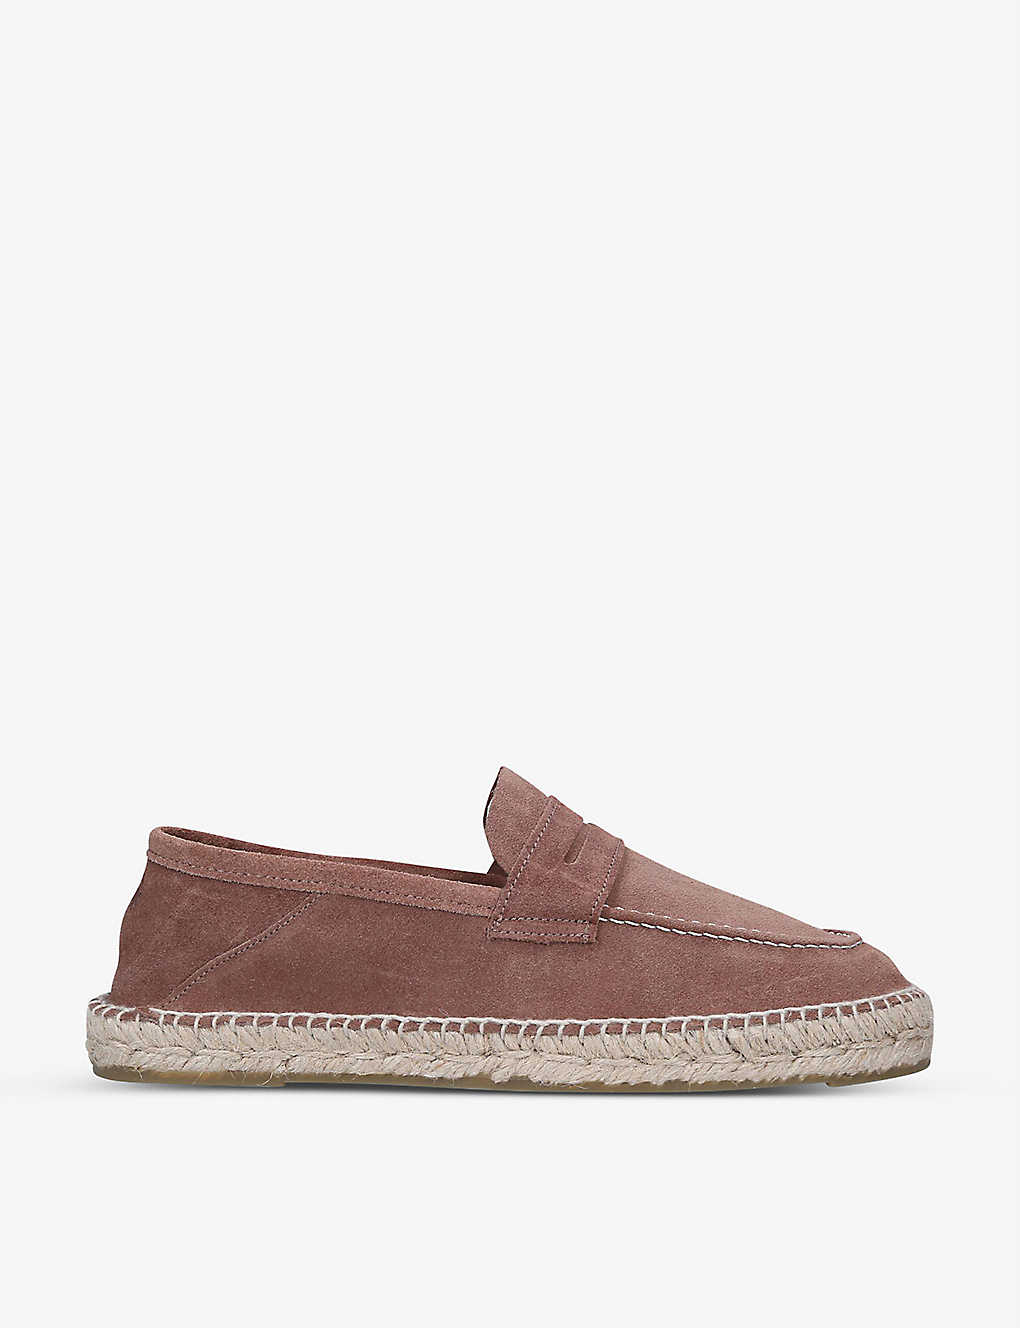 Hamptons loafer-style jute espadrilles Selfridges & Co Men Shoes Flat Shoes Loafers 